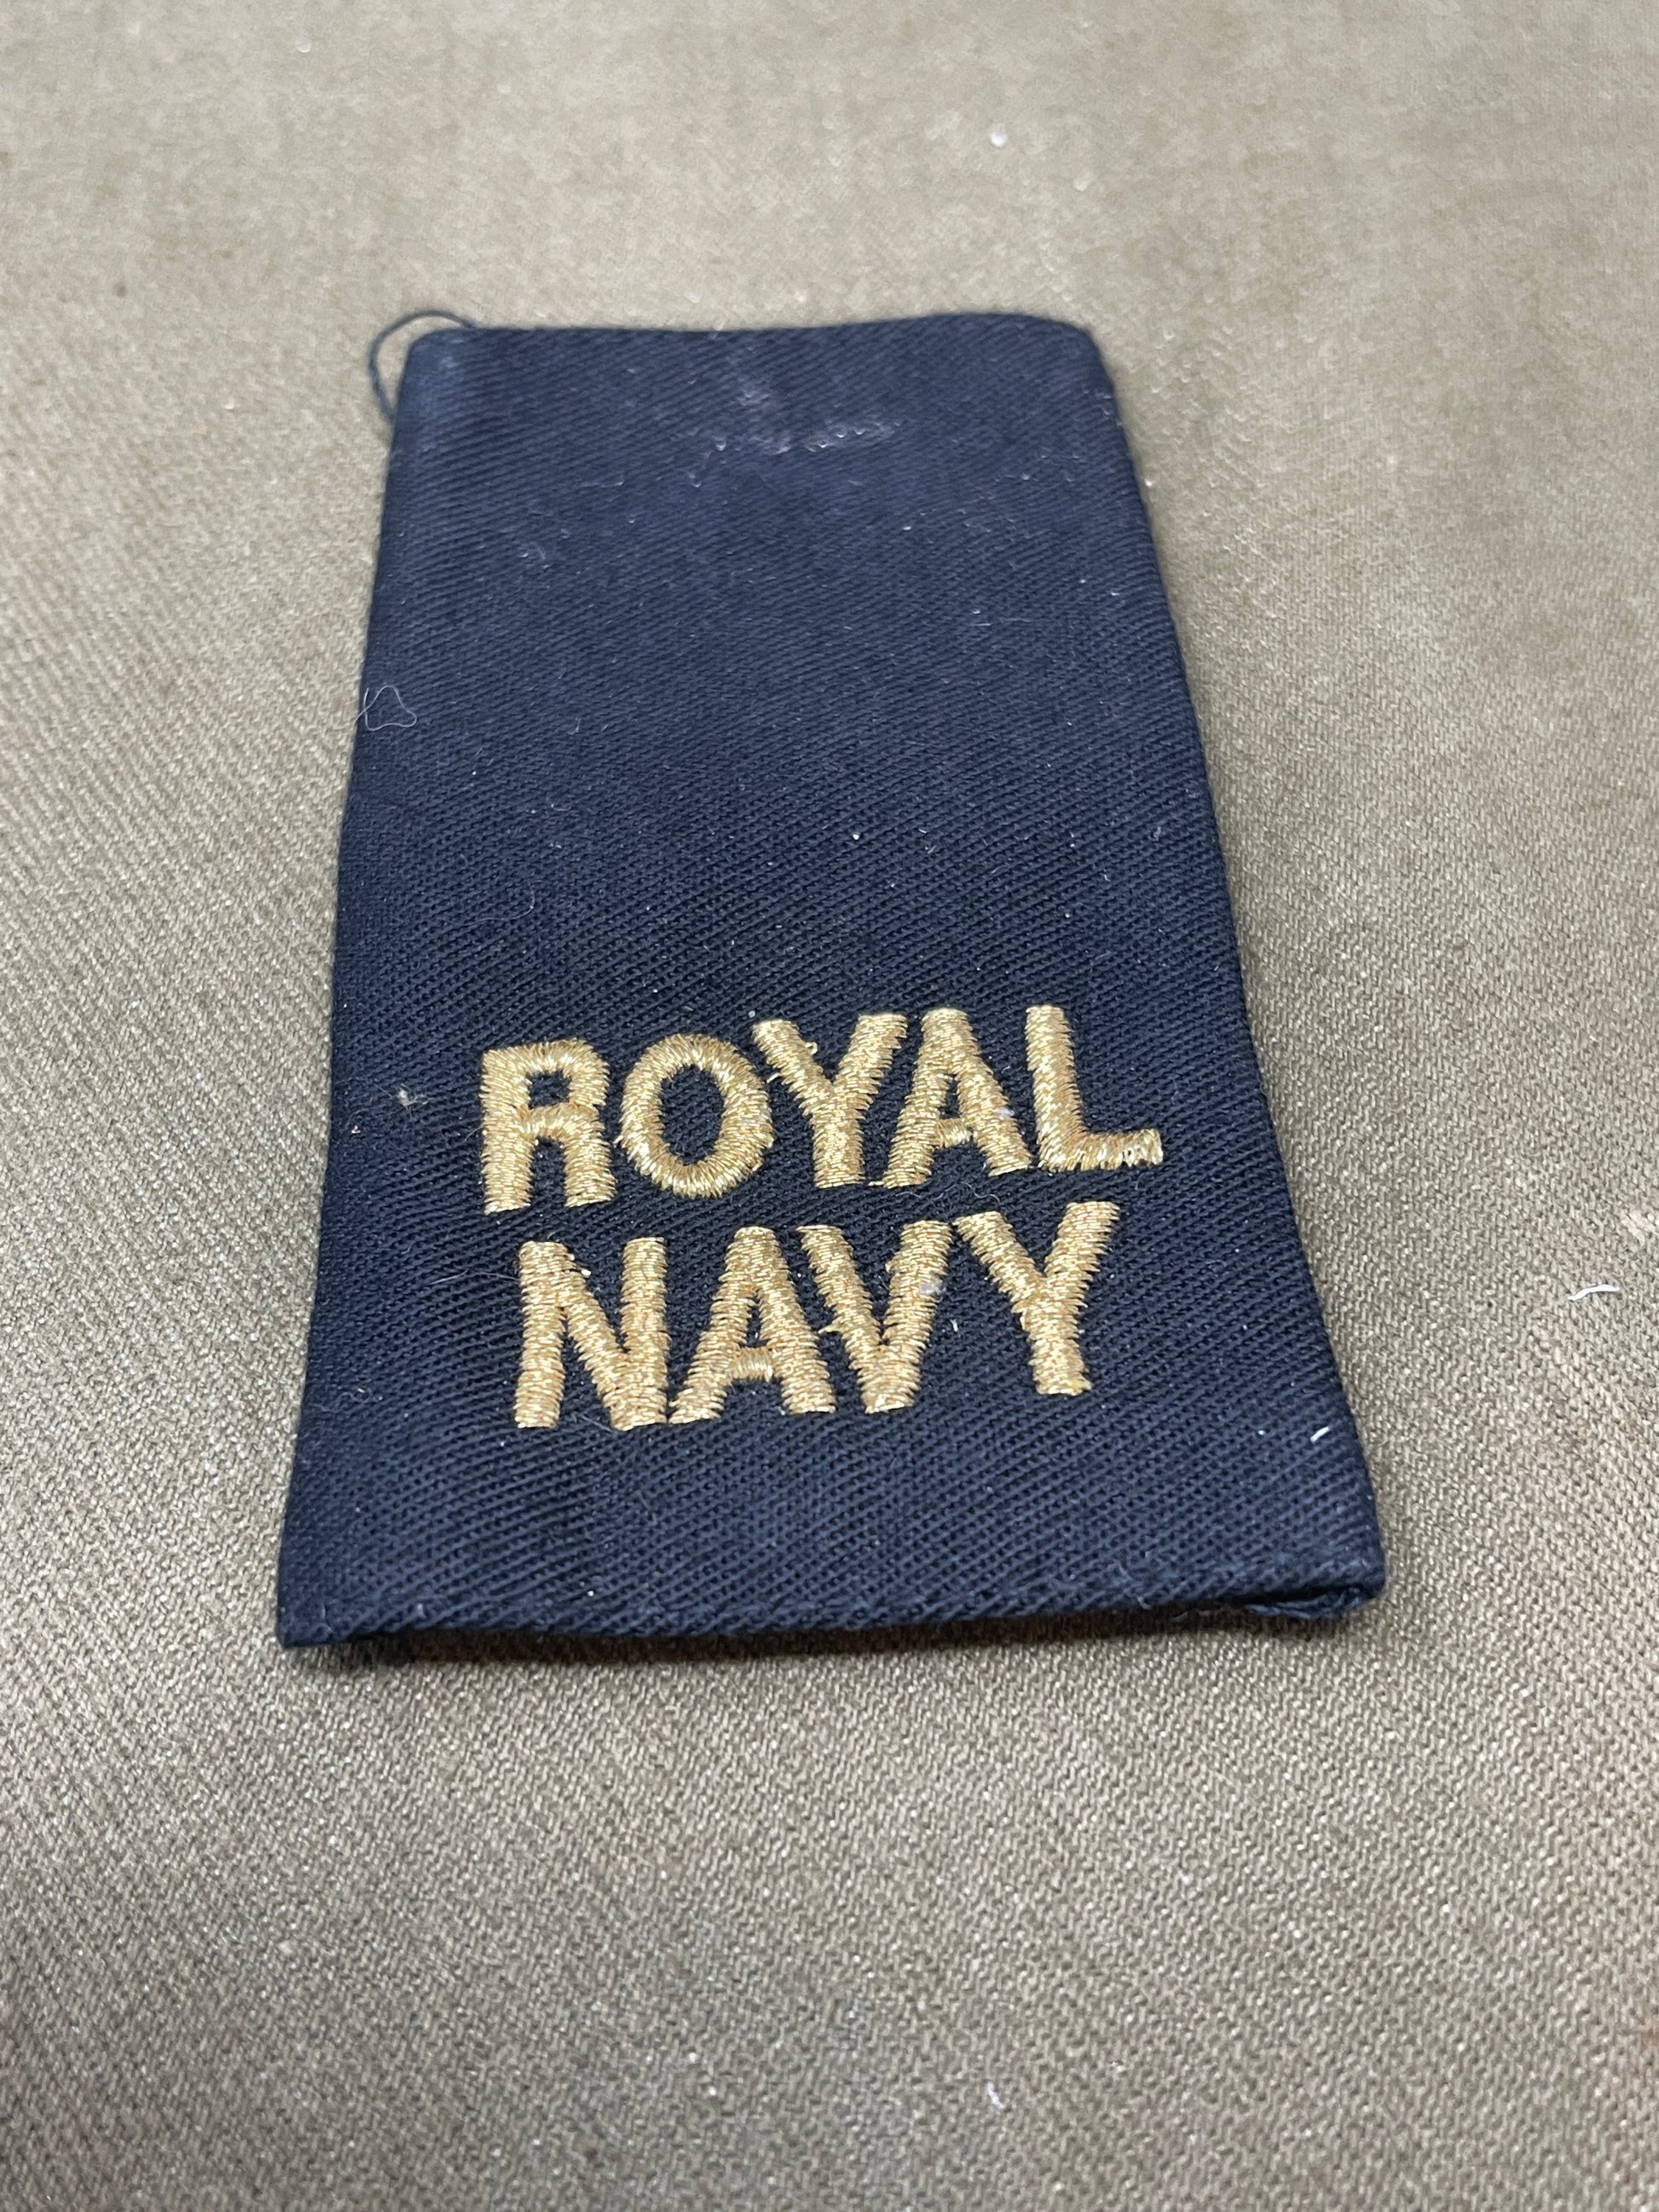 Royal Navy Uniform Slide